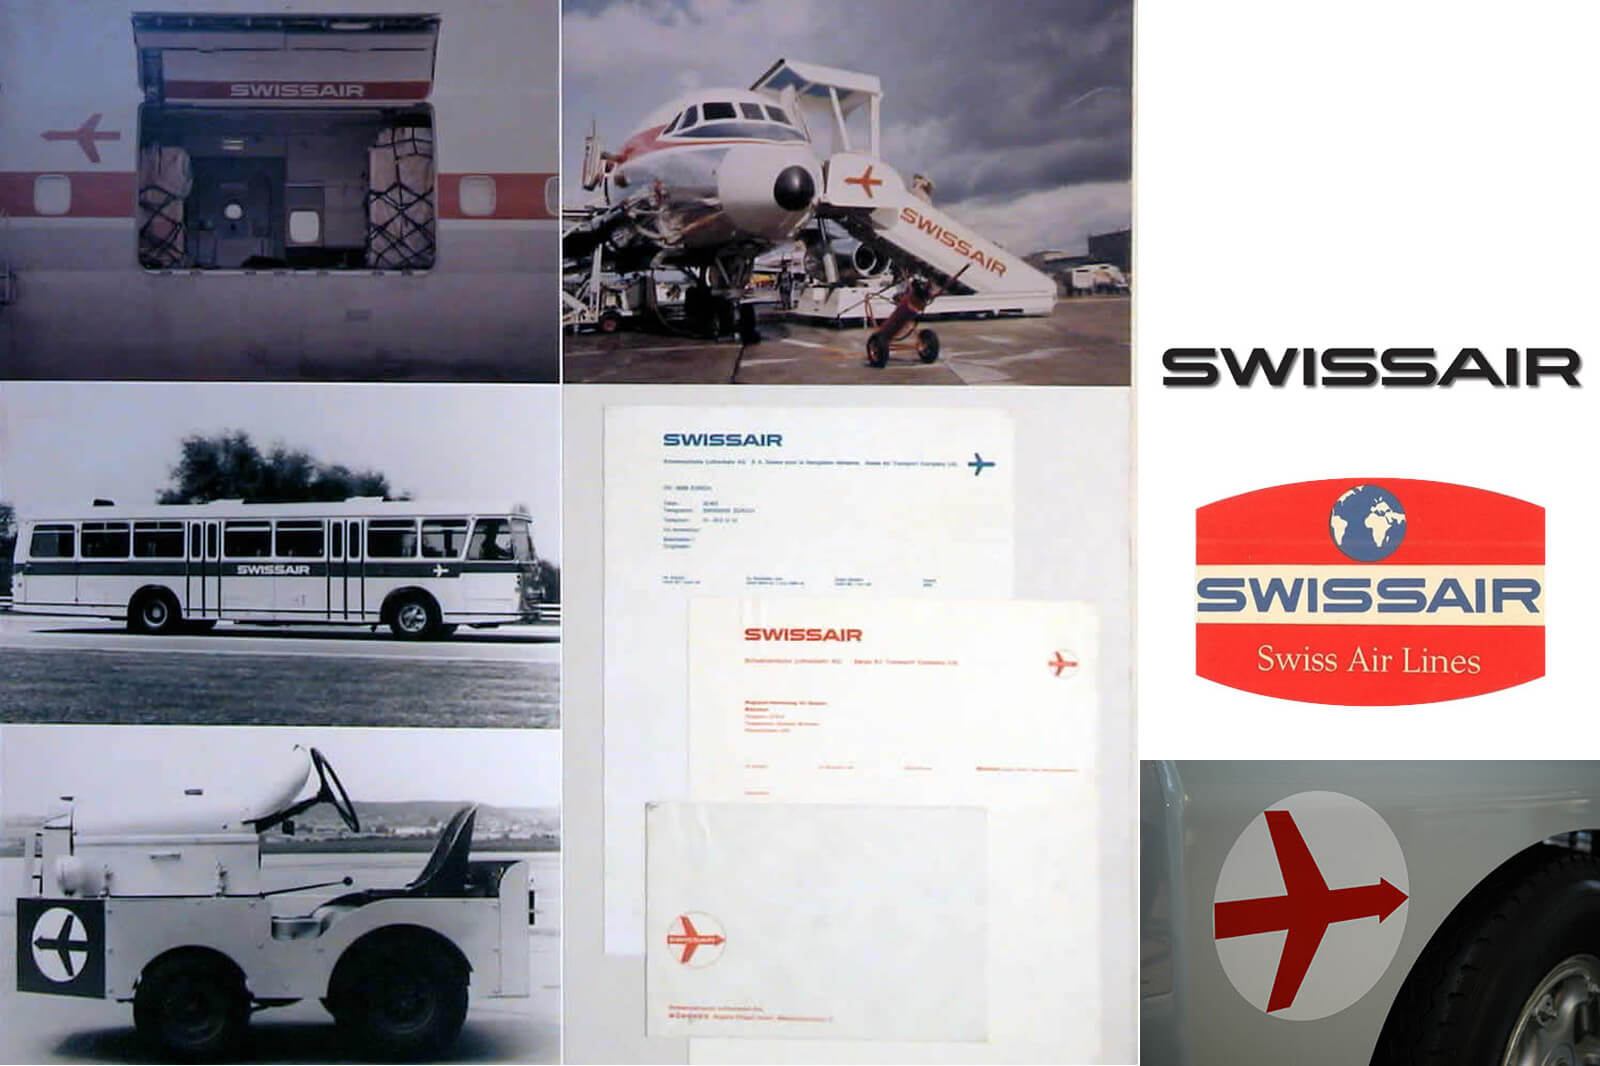 Swissair Posters and Logos - 1960s Swissair Logo